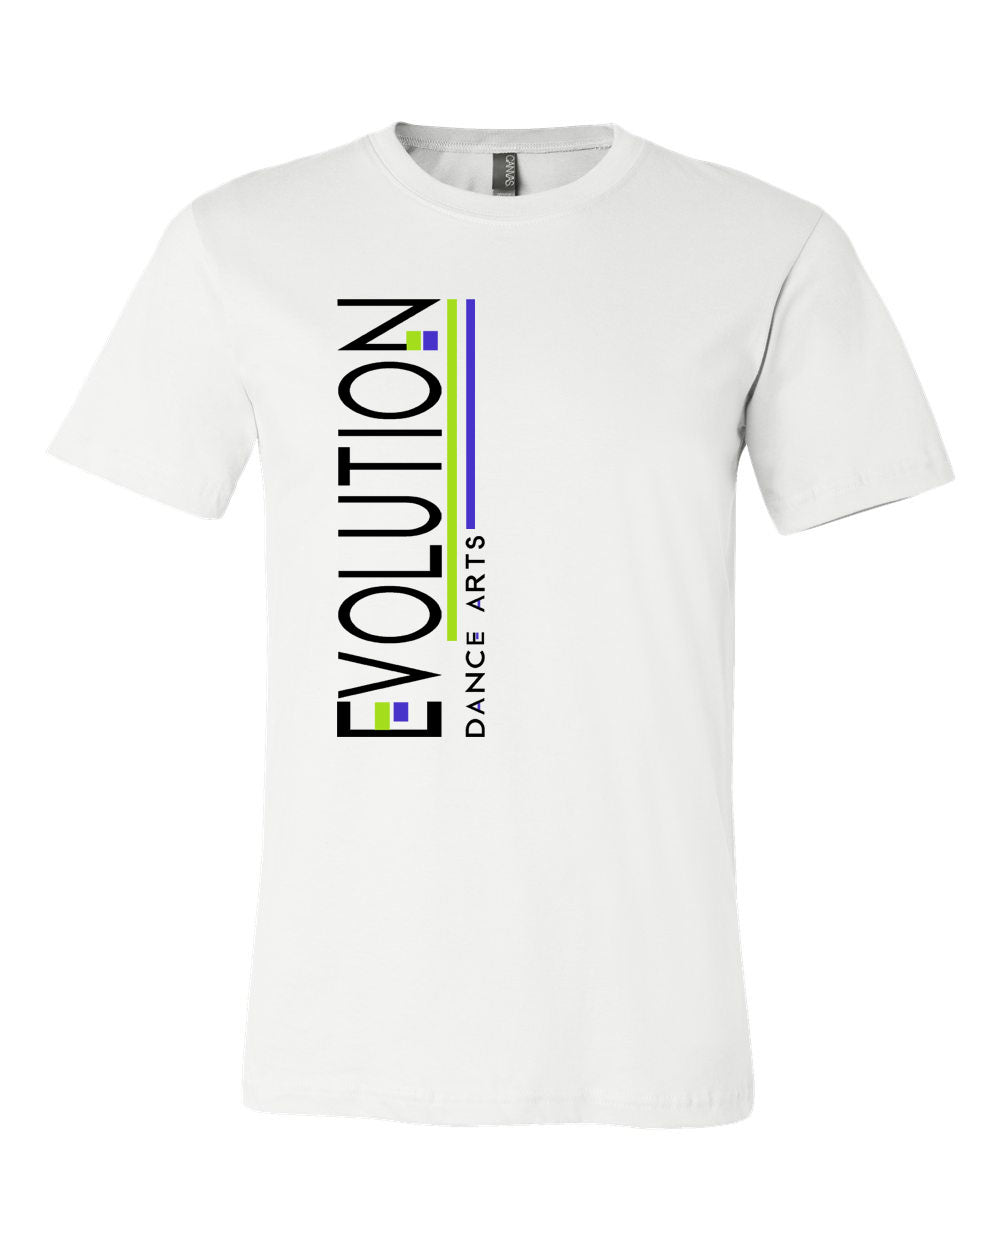 Evolution Dance Arts Design 5 t-Shirt